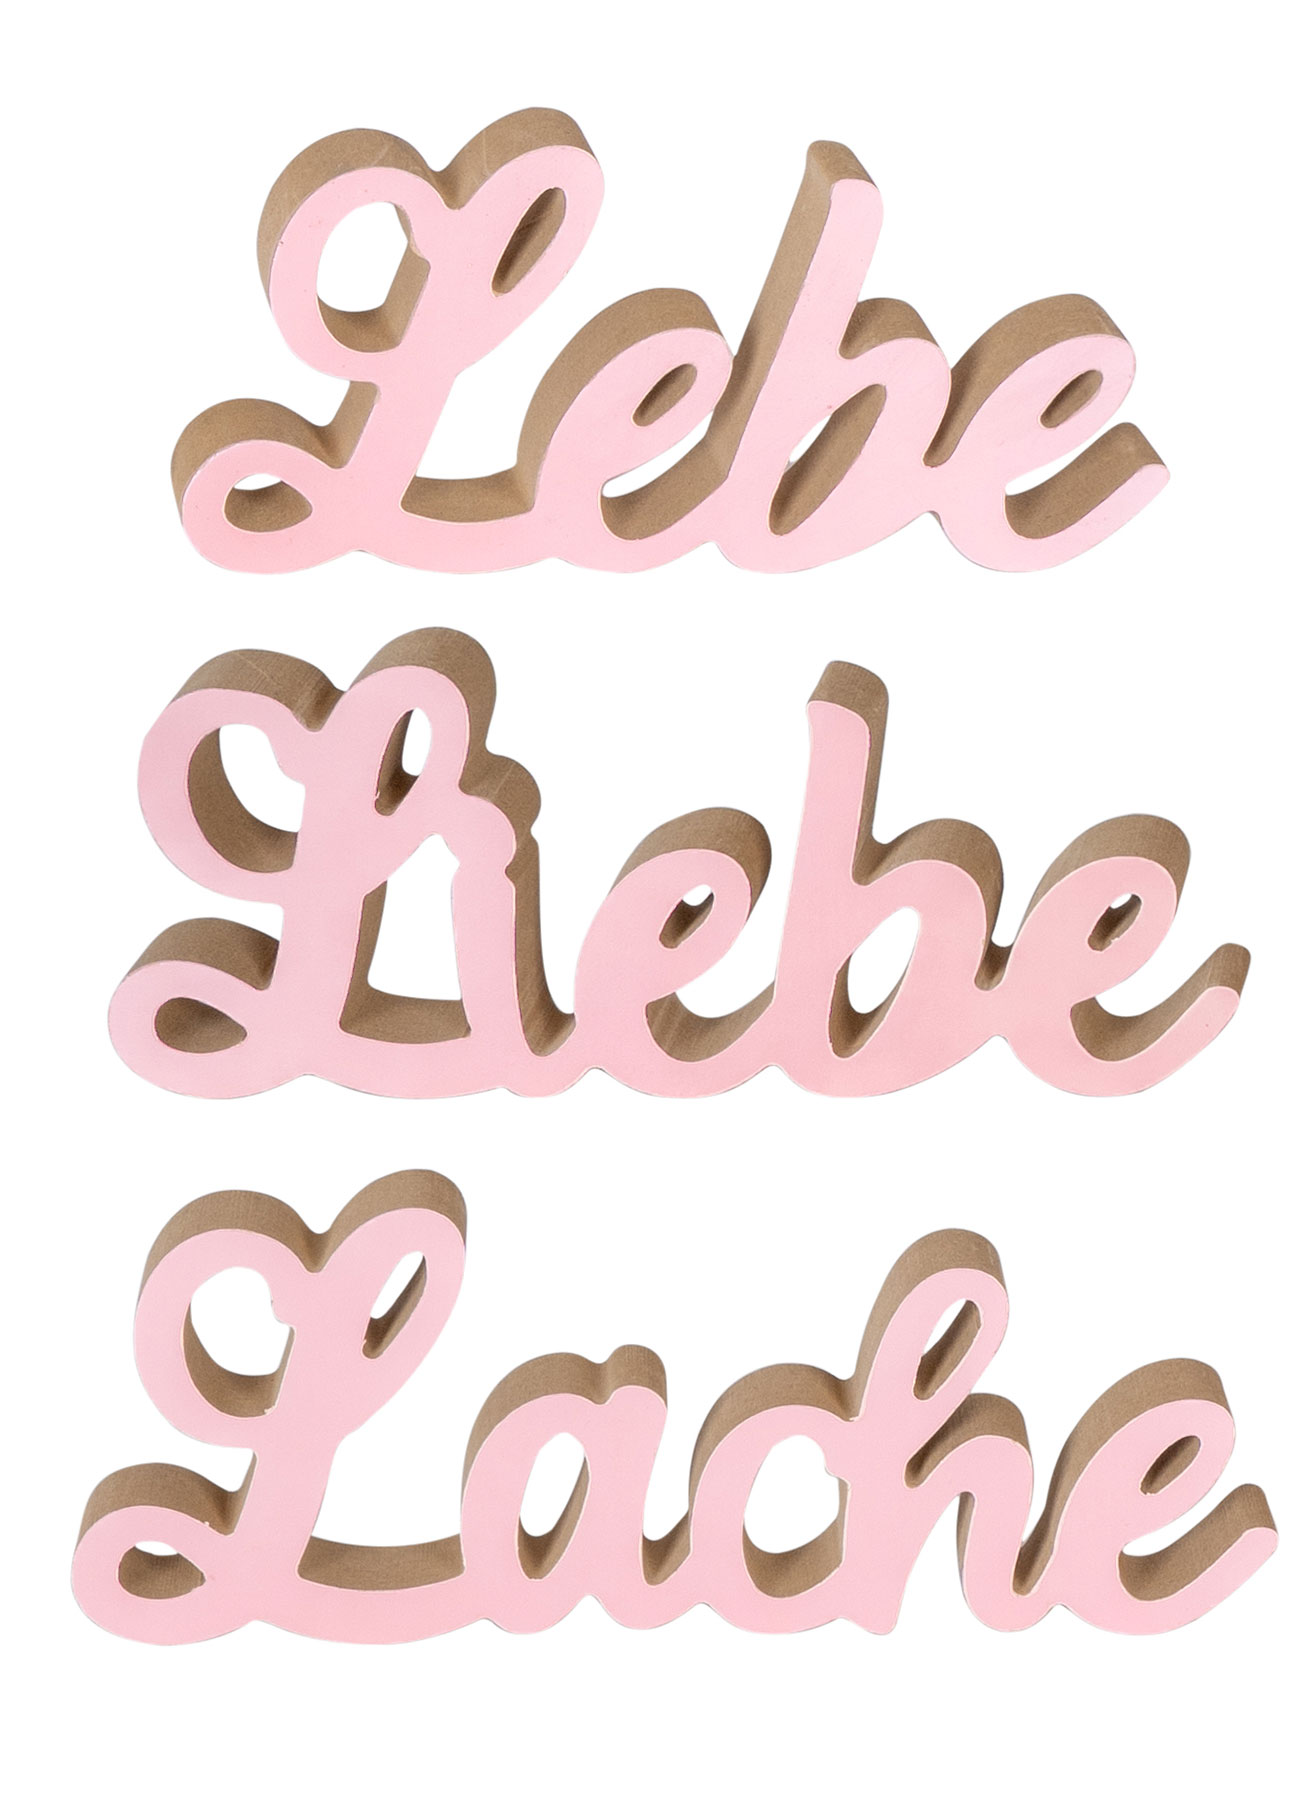 3er Set Schriftzug Lebe Liebe Lache Pastell Rosa Holz Tischdeko Deko Aufsteller